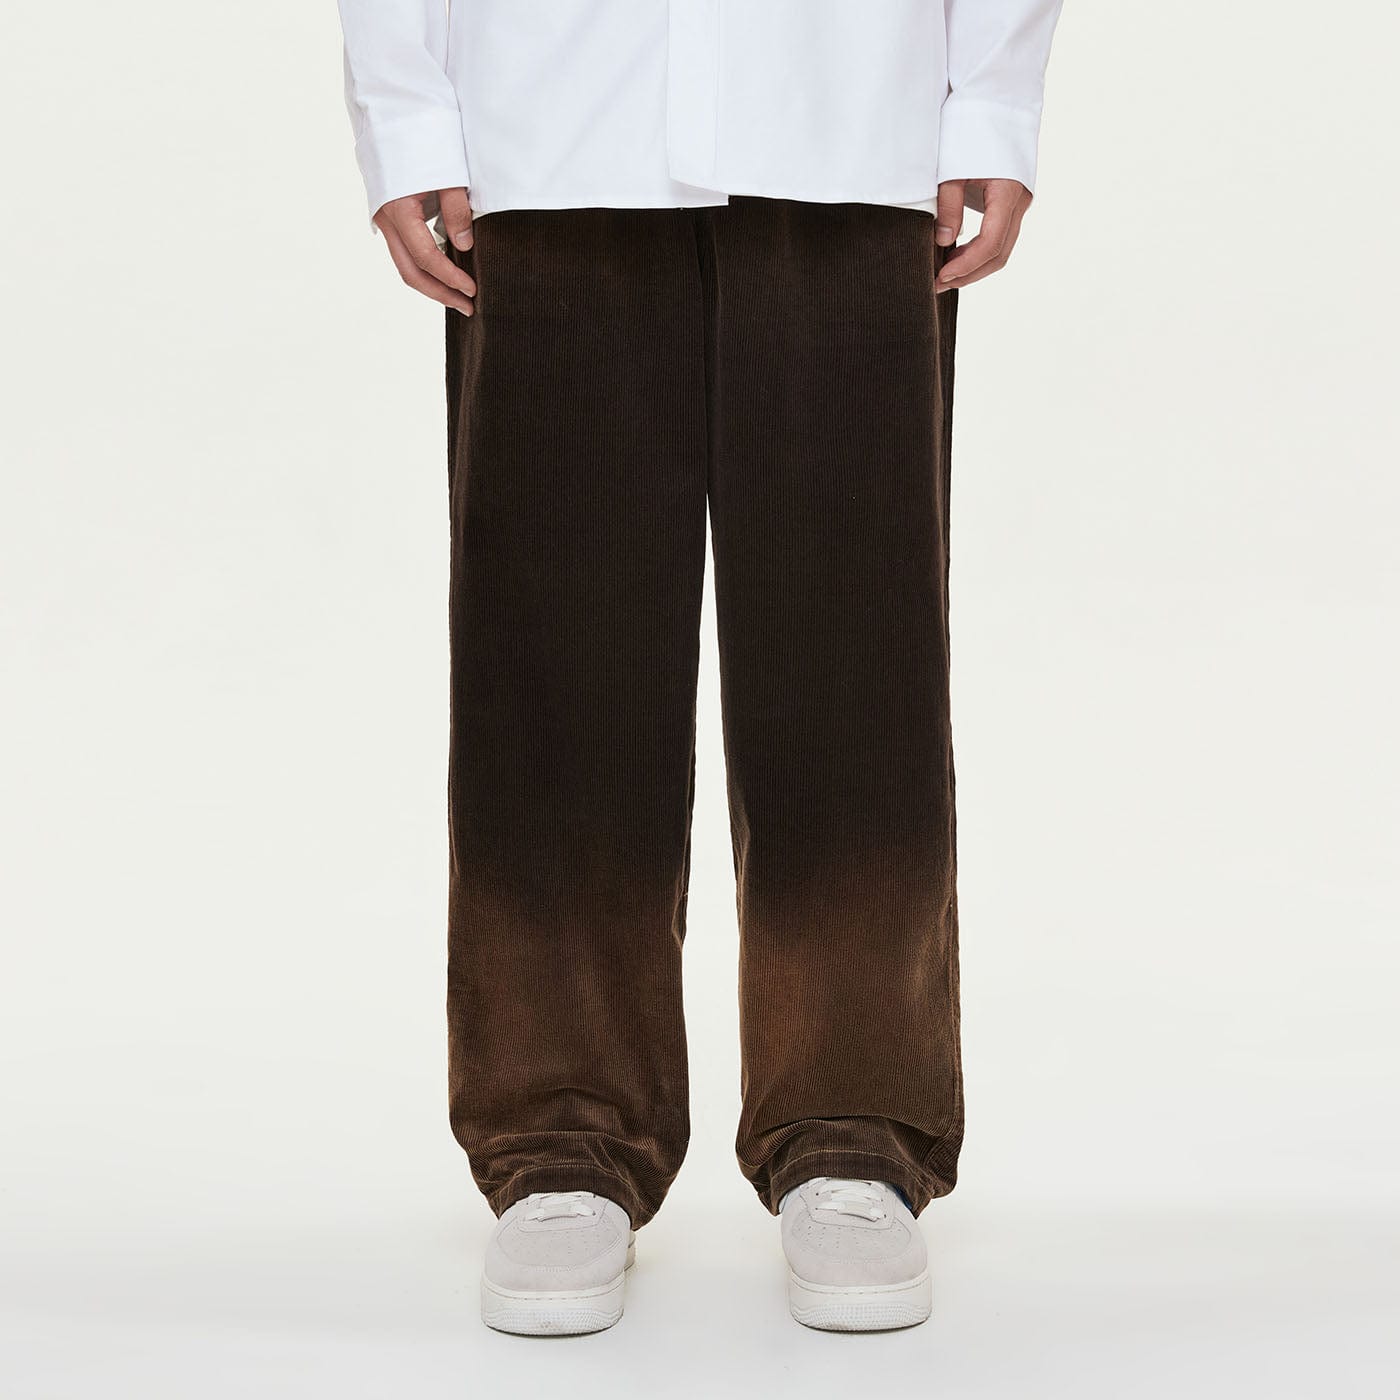 CONKLAB Creased Gradient Straight Pants, premium urban and streetwear designers apparel on PROJECTISR.com, Conklab